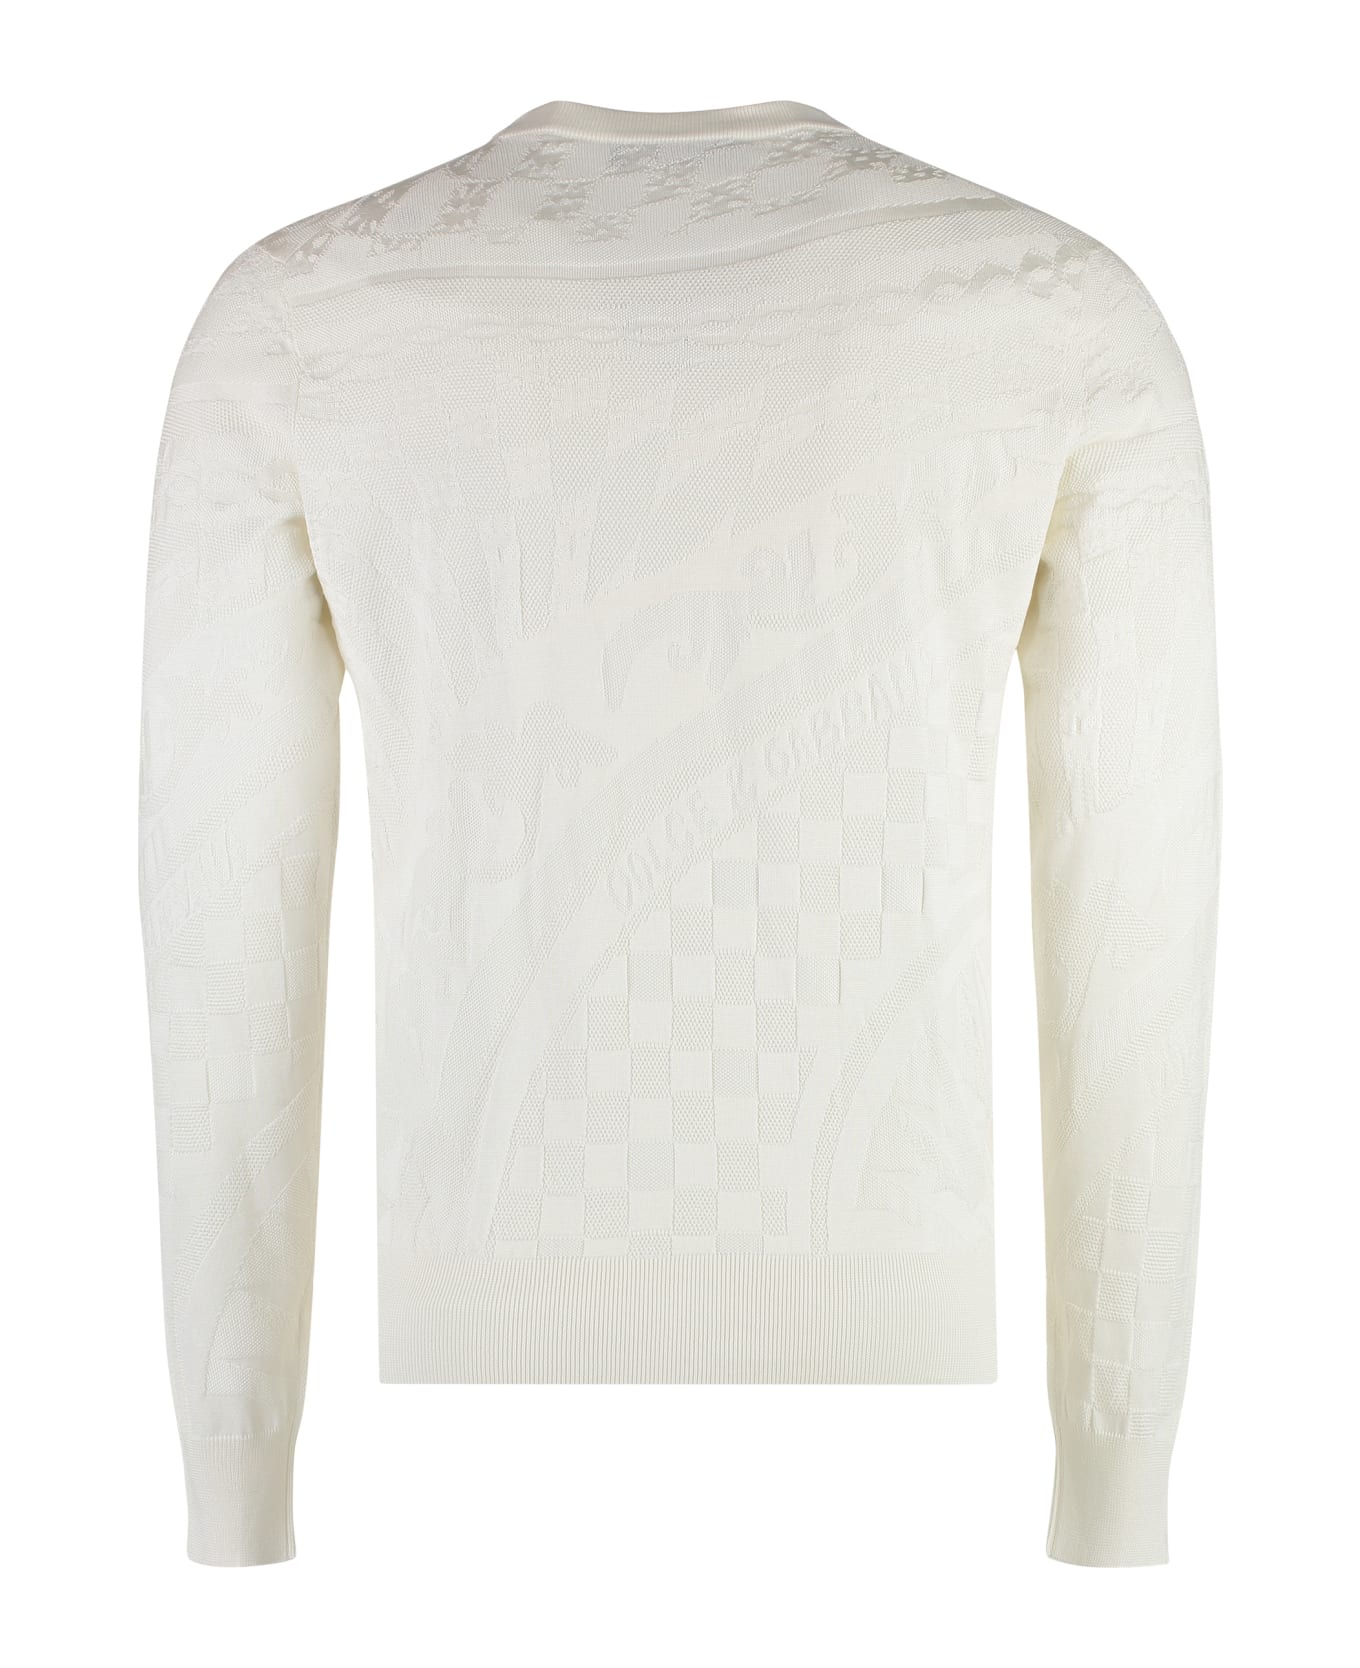 Dolce & Gabbana Crew-neck Sweater - Ivory